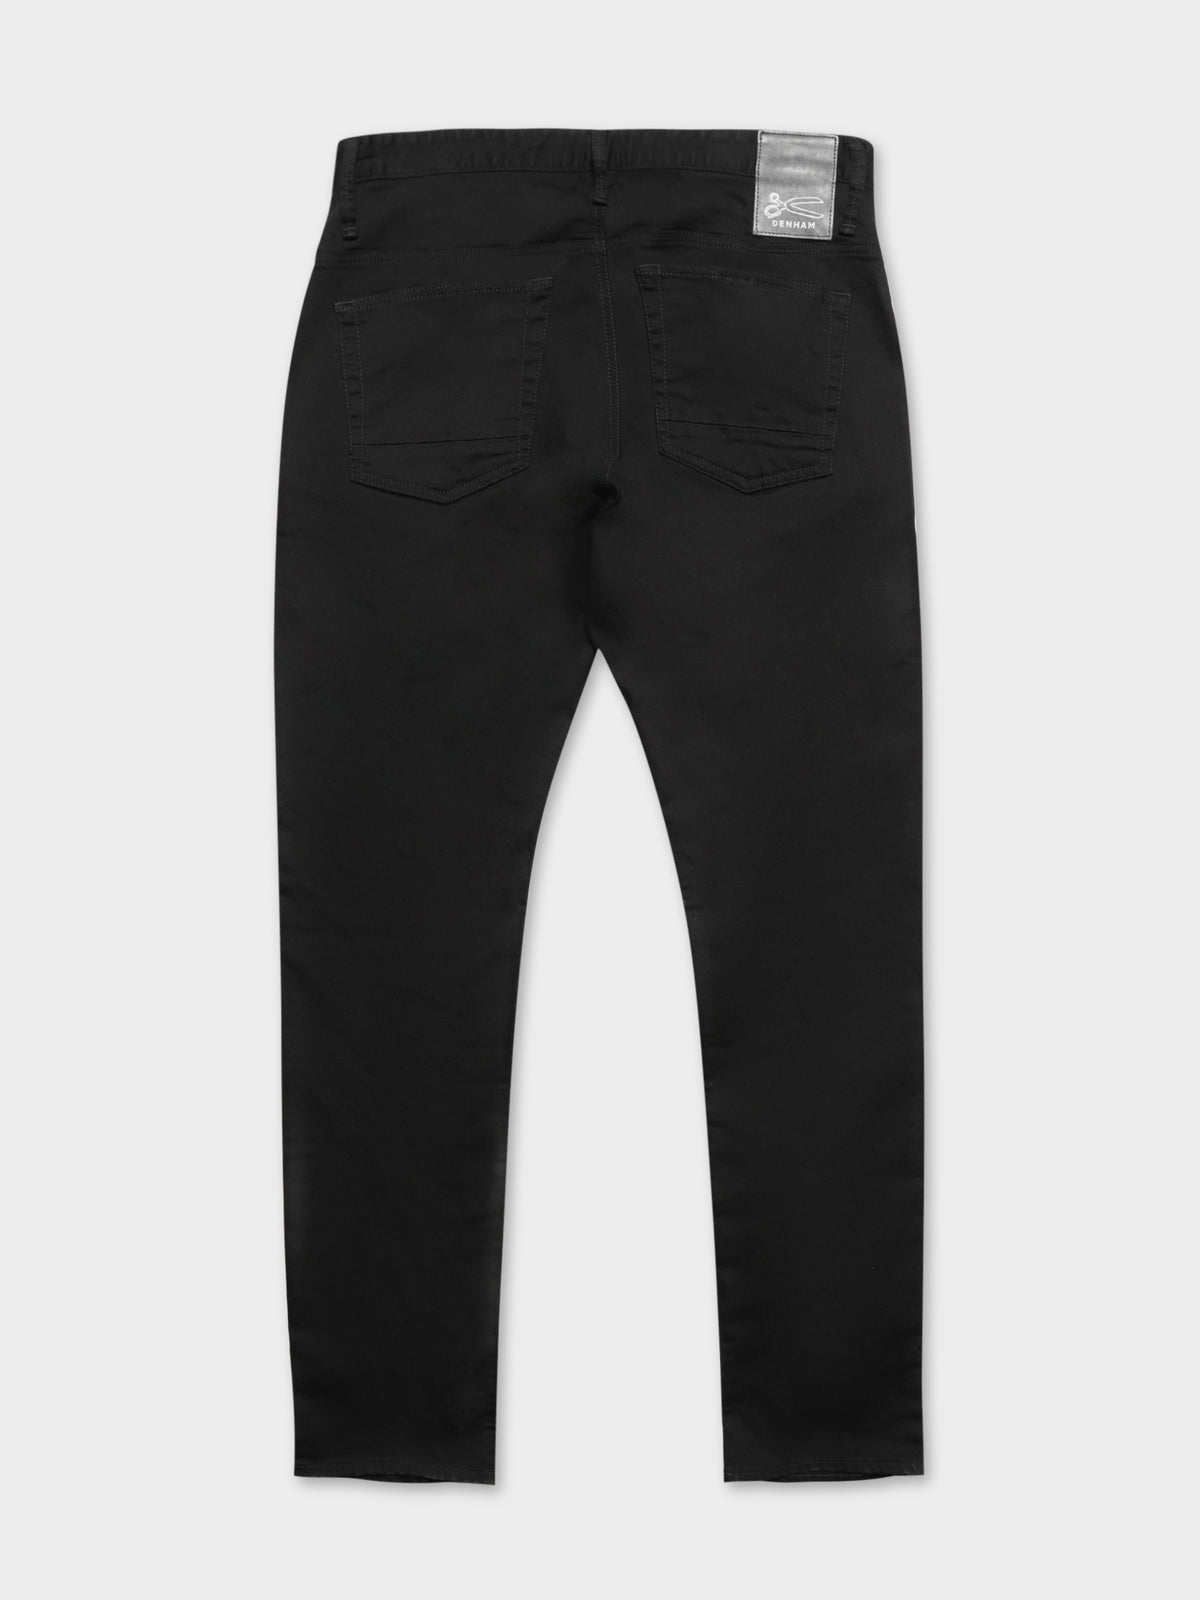 APE FBL Denim Jeans in Black